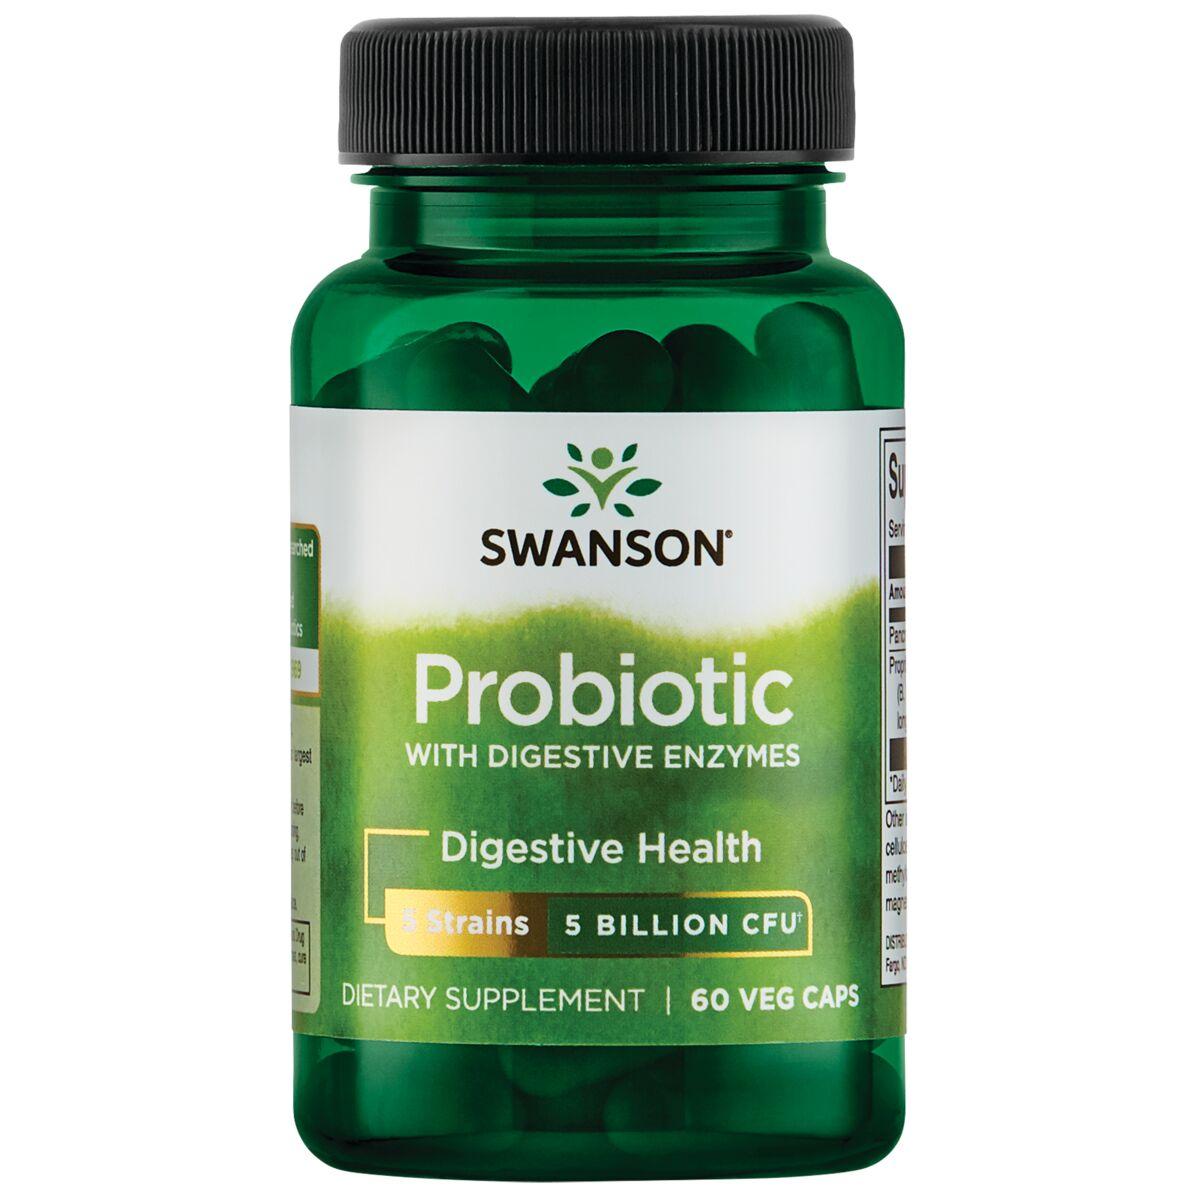 Swanson Probiotics Probiotic with Digestive Enzymes Supplement Vitamin | 5 Billion CFU | 60 Veg Caps